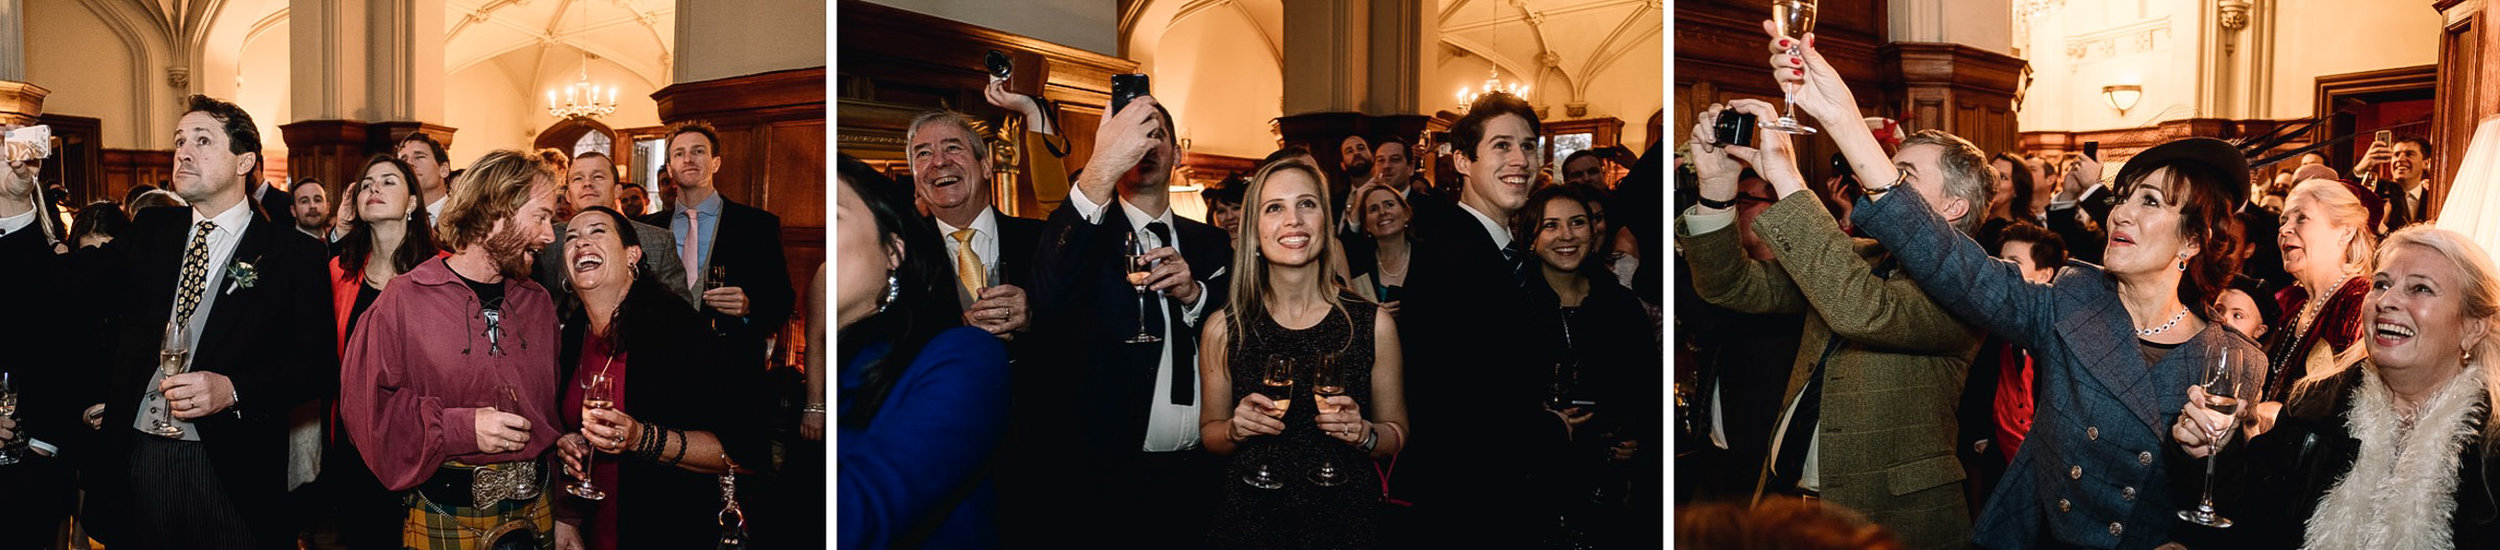 50- edinburgh-wedding-laughing-guests.jpg